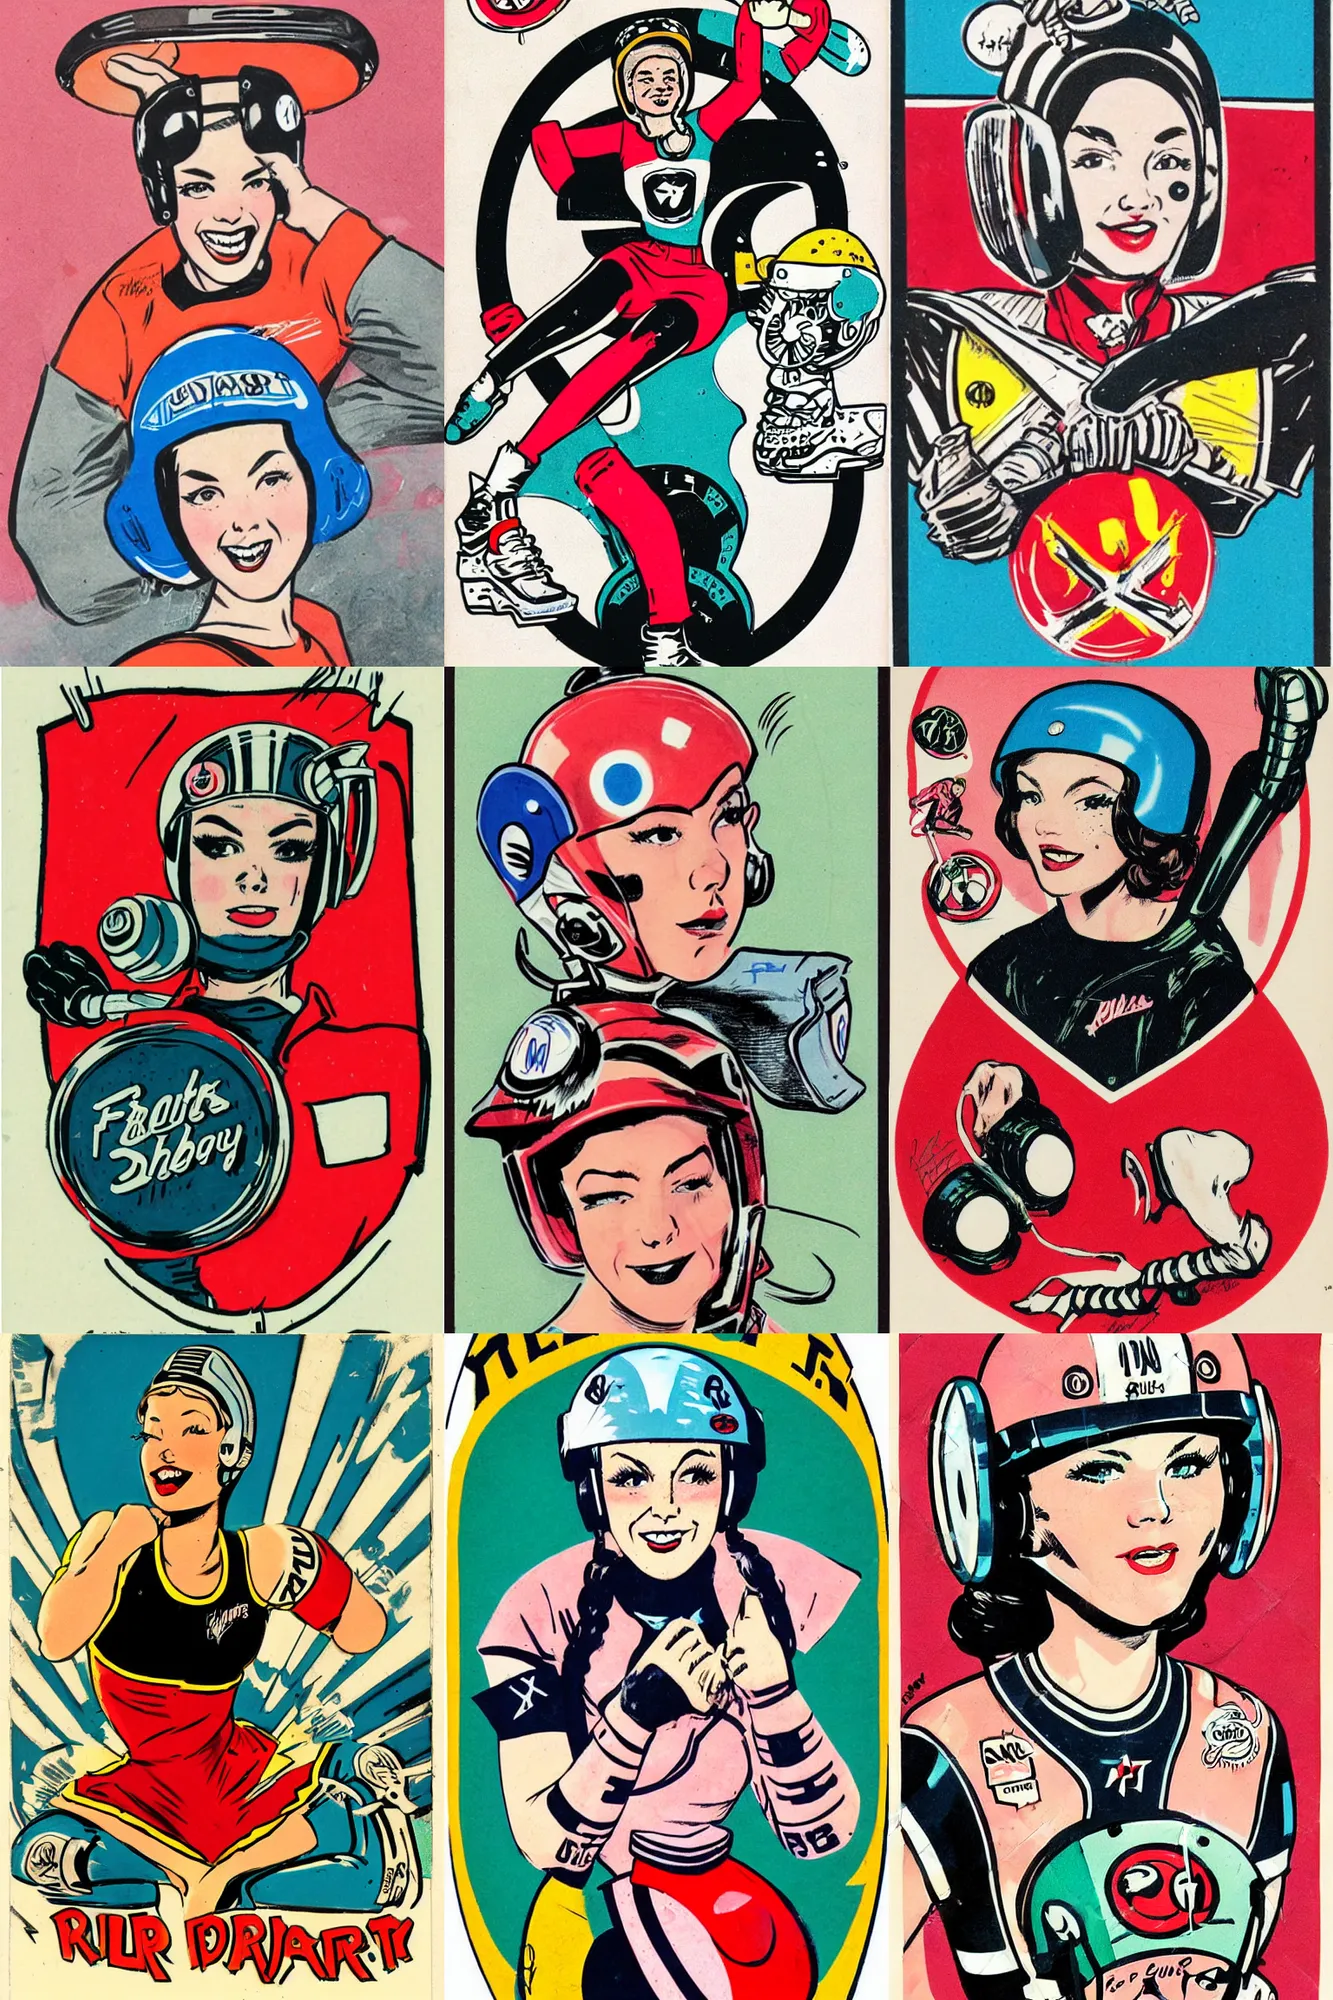 Prompt: roller derby girl portrait, logo, wearing helmet, Frank Hampson and mcbess, 1950s